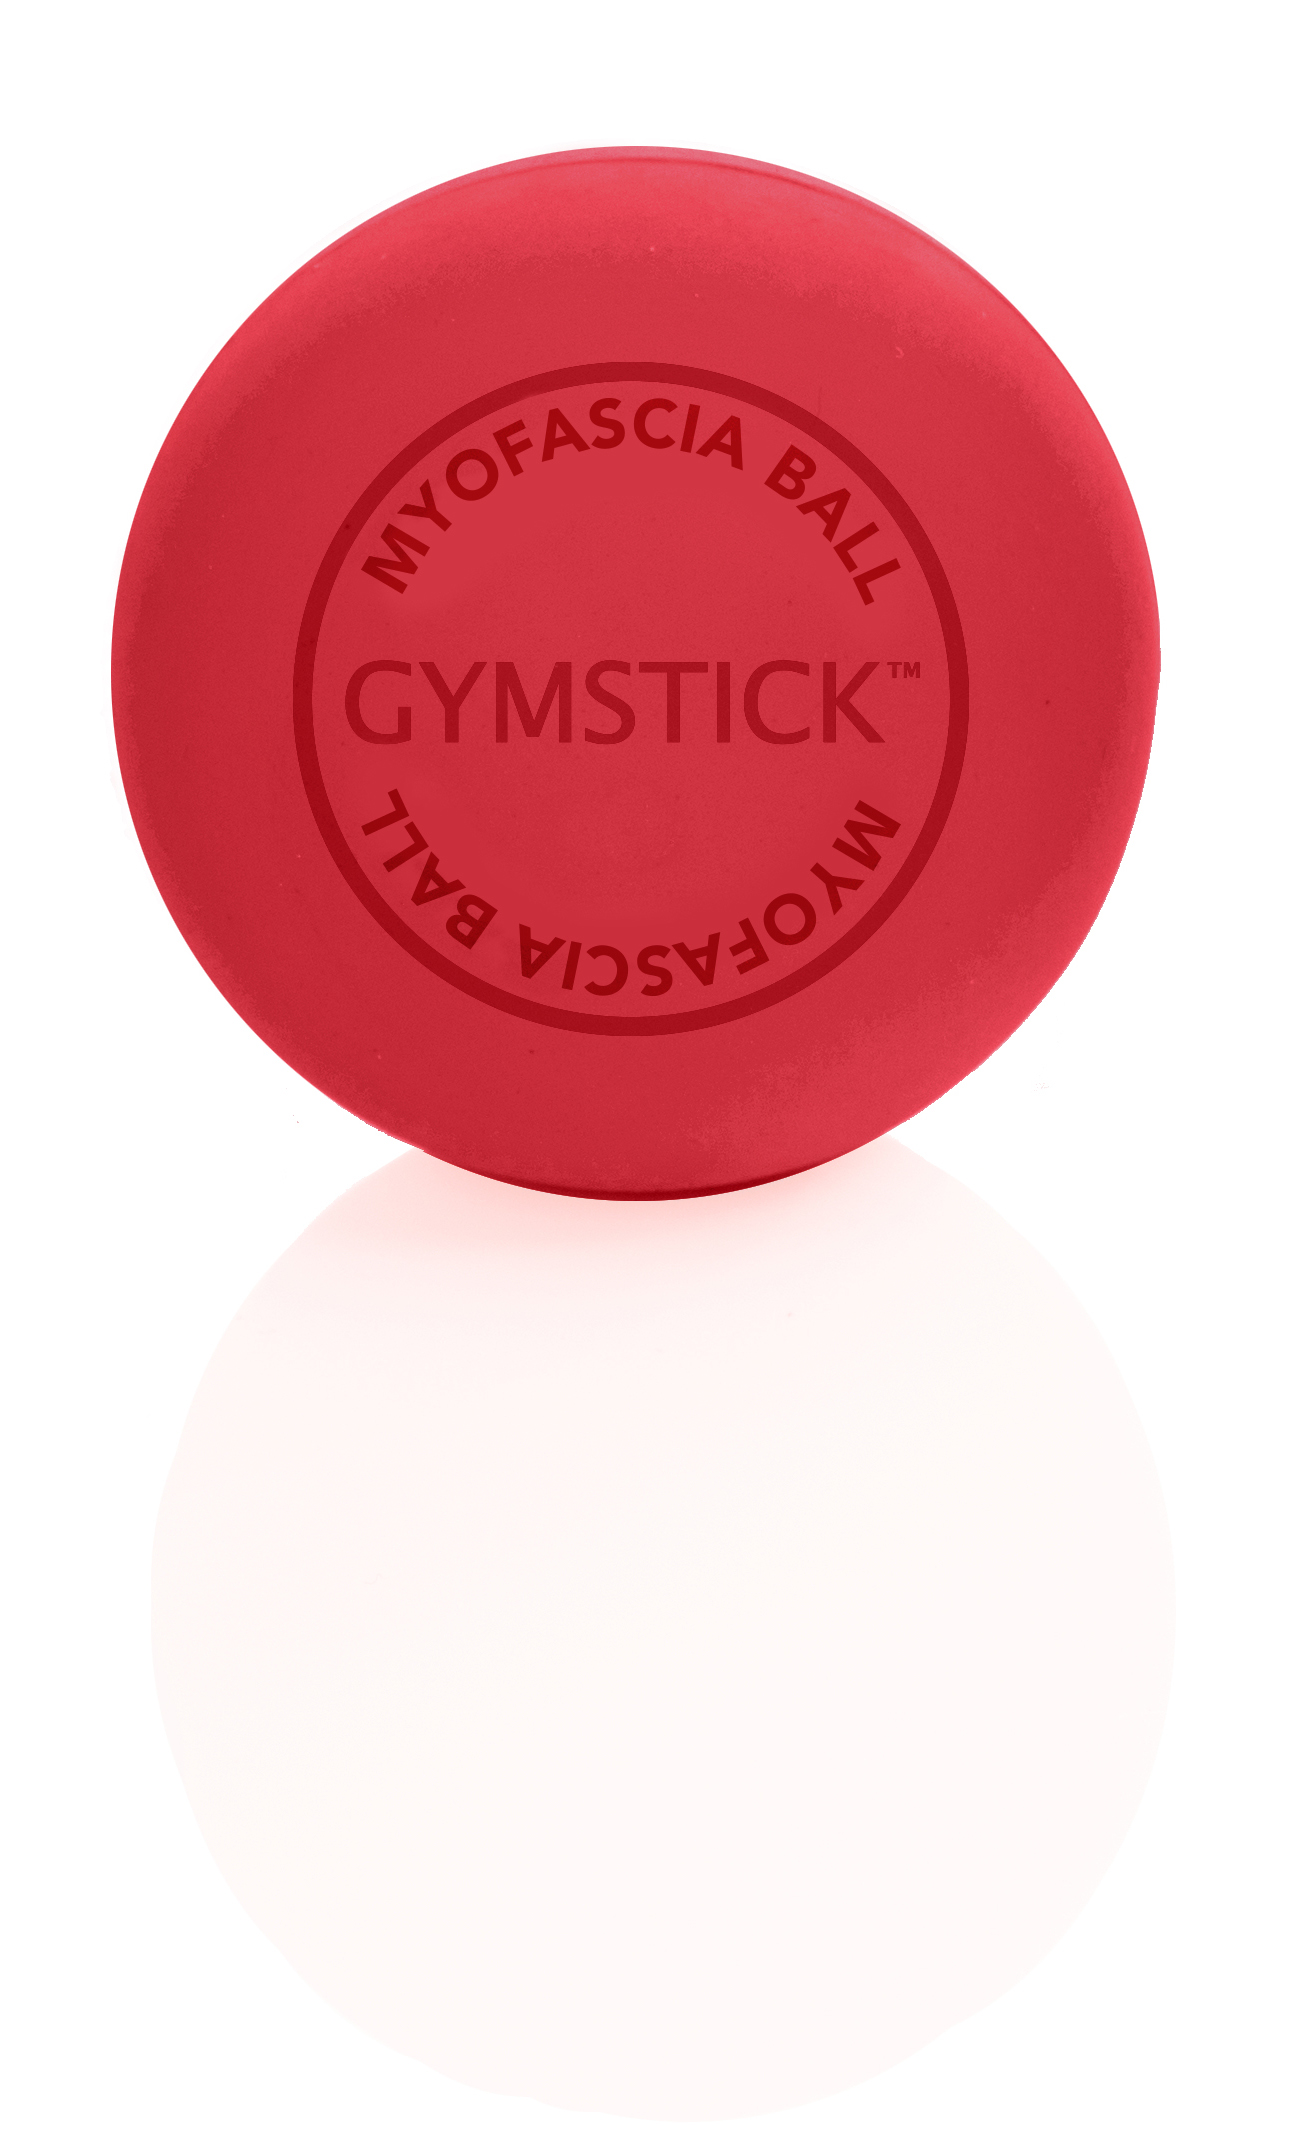 Gymstick  MyoFascial Massage Bal